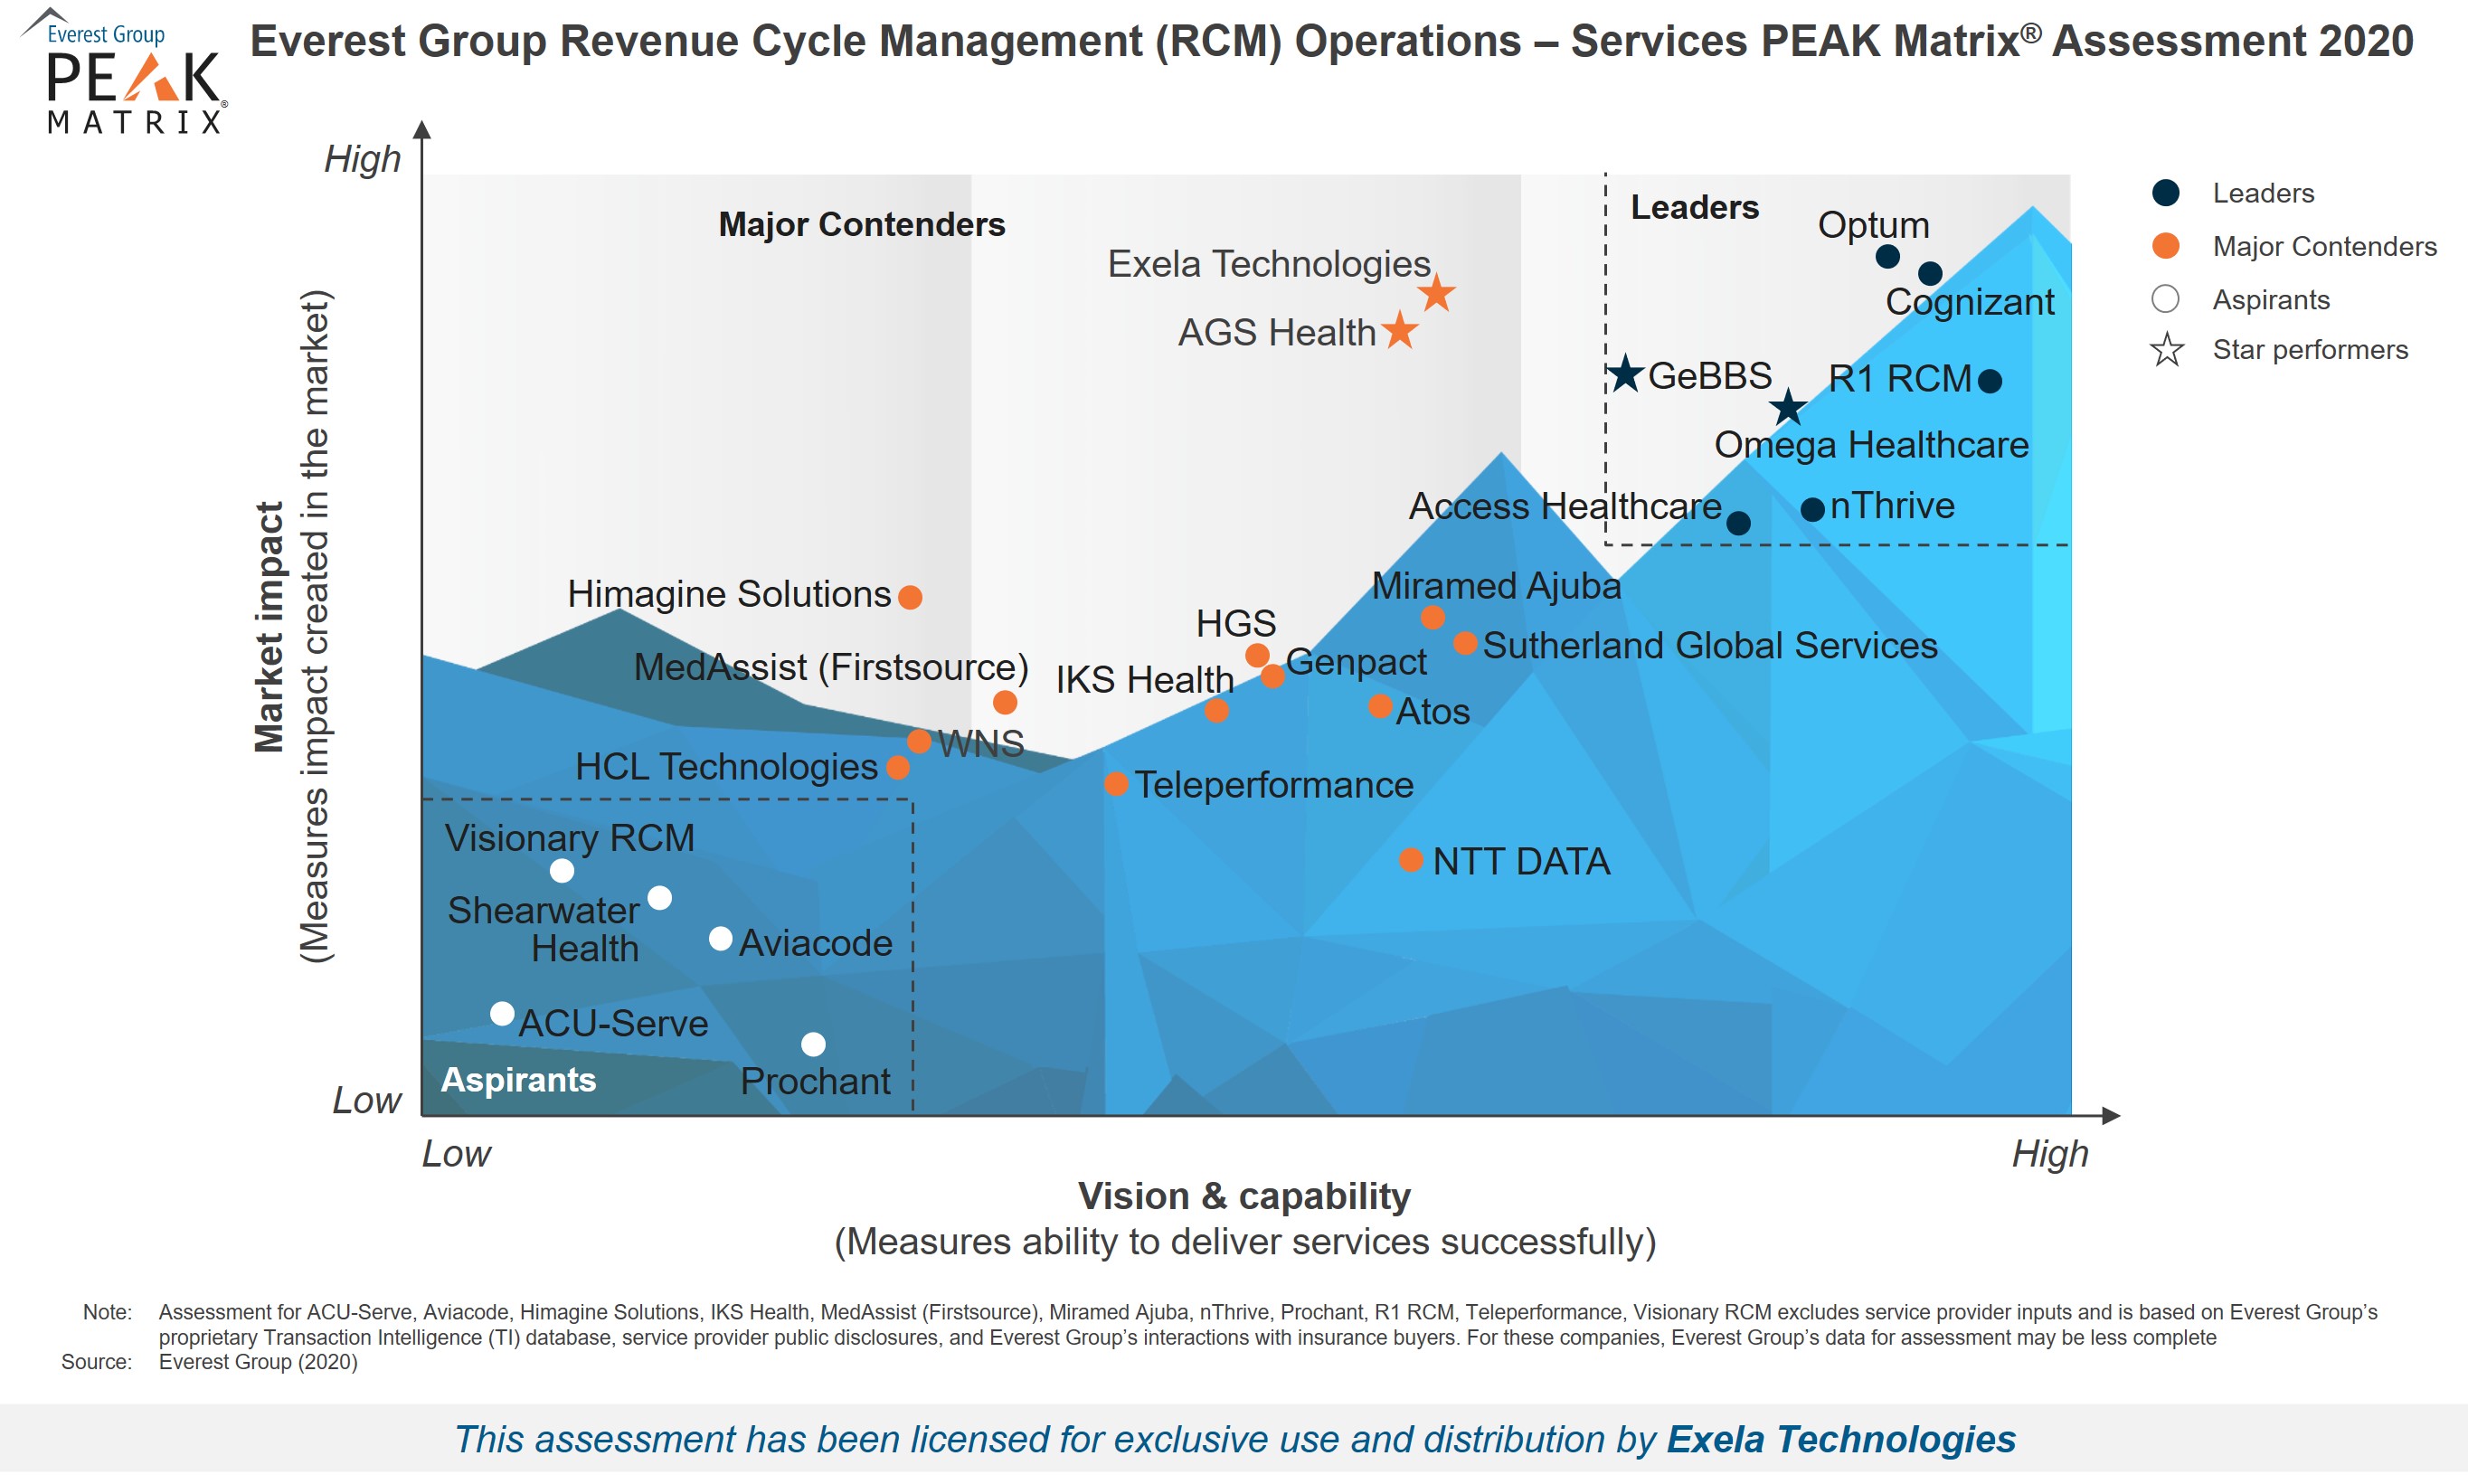 Everest Group Peak Matrix - Revenue Cycle Management (RCM) Operations